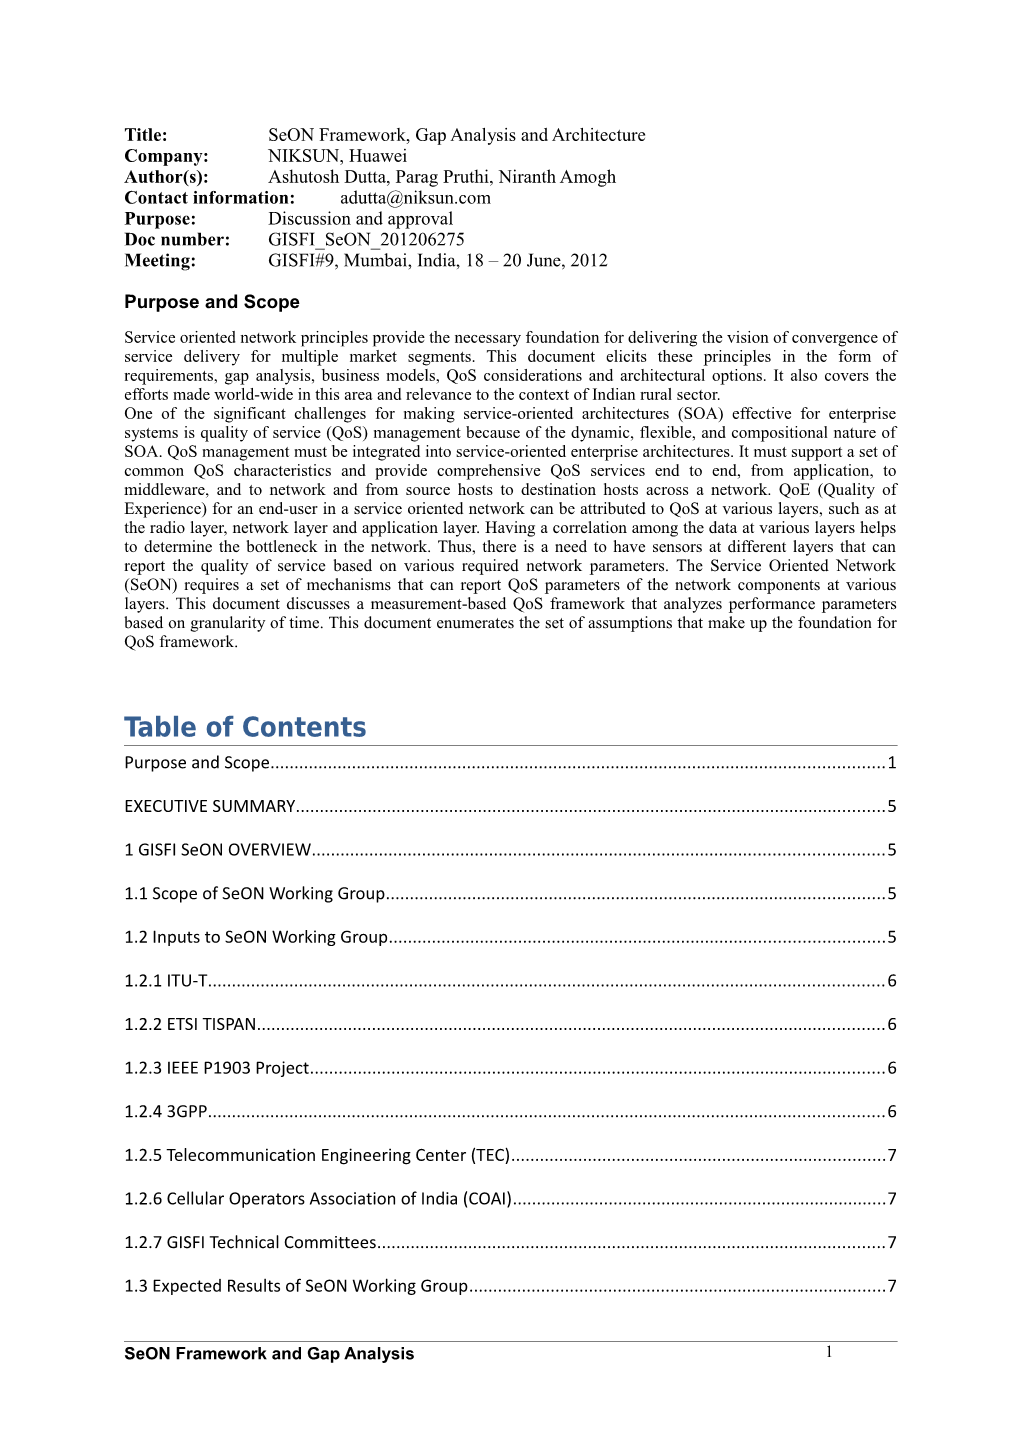 Title:Seon Framework, Gap Analysis and Architecture